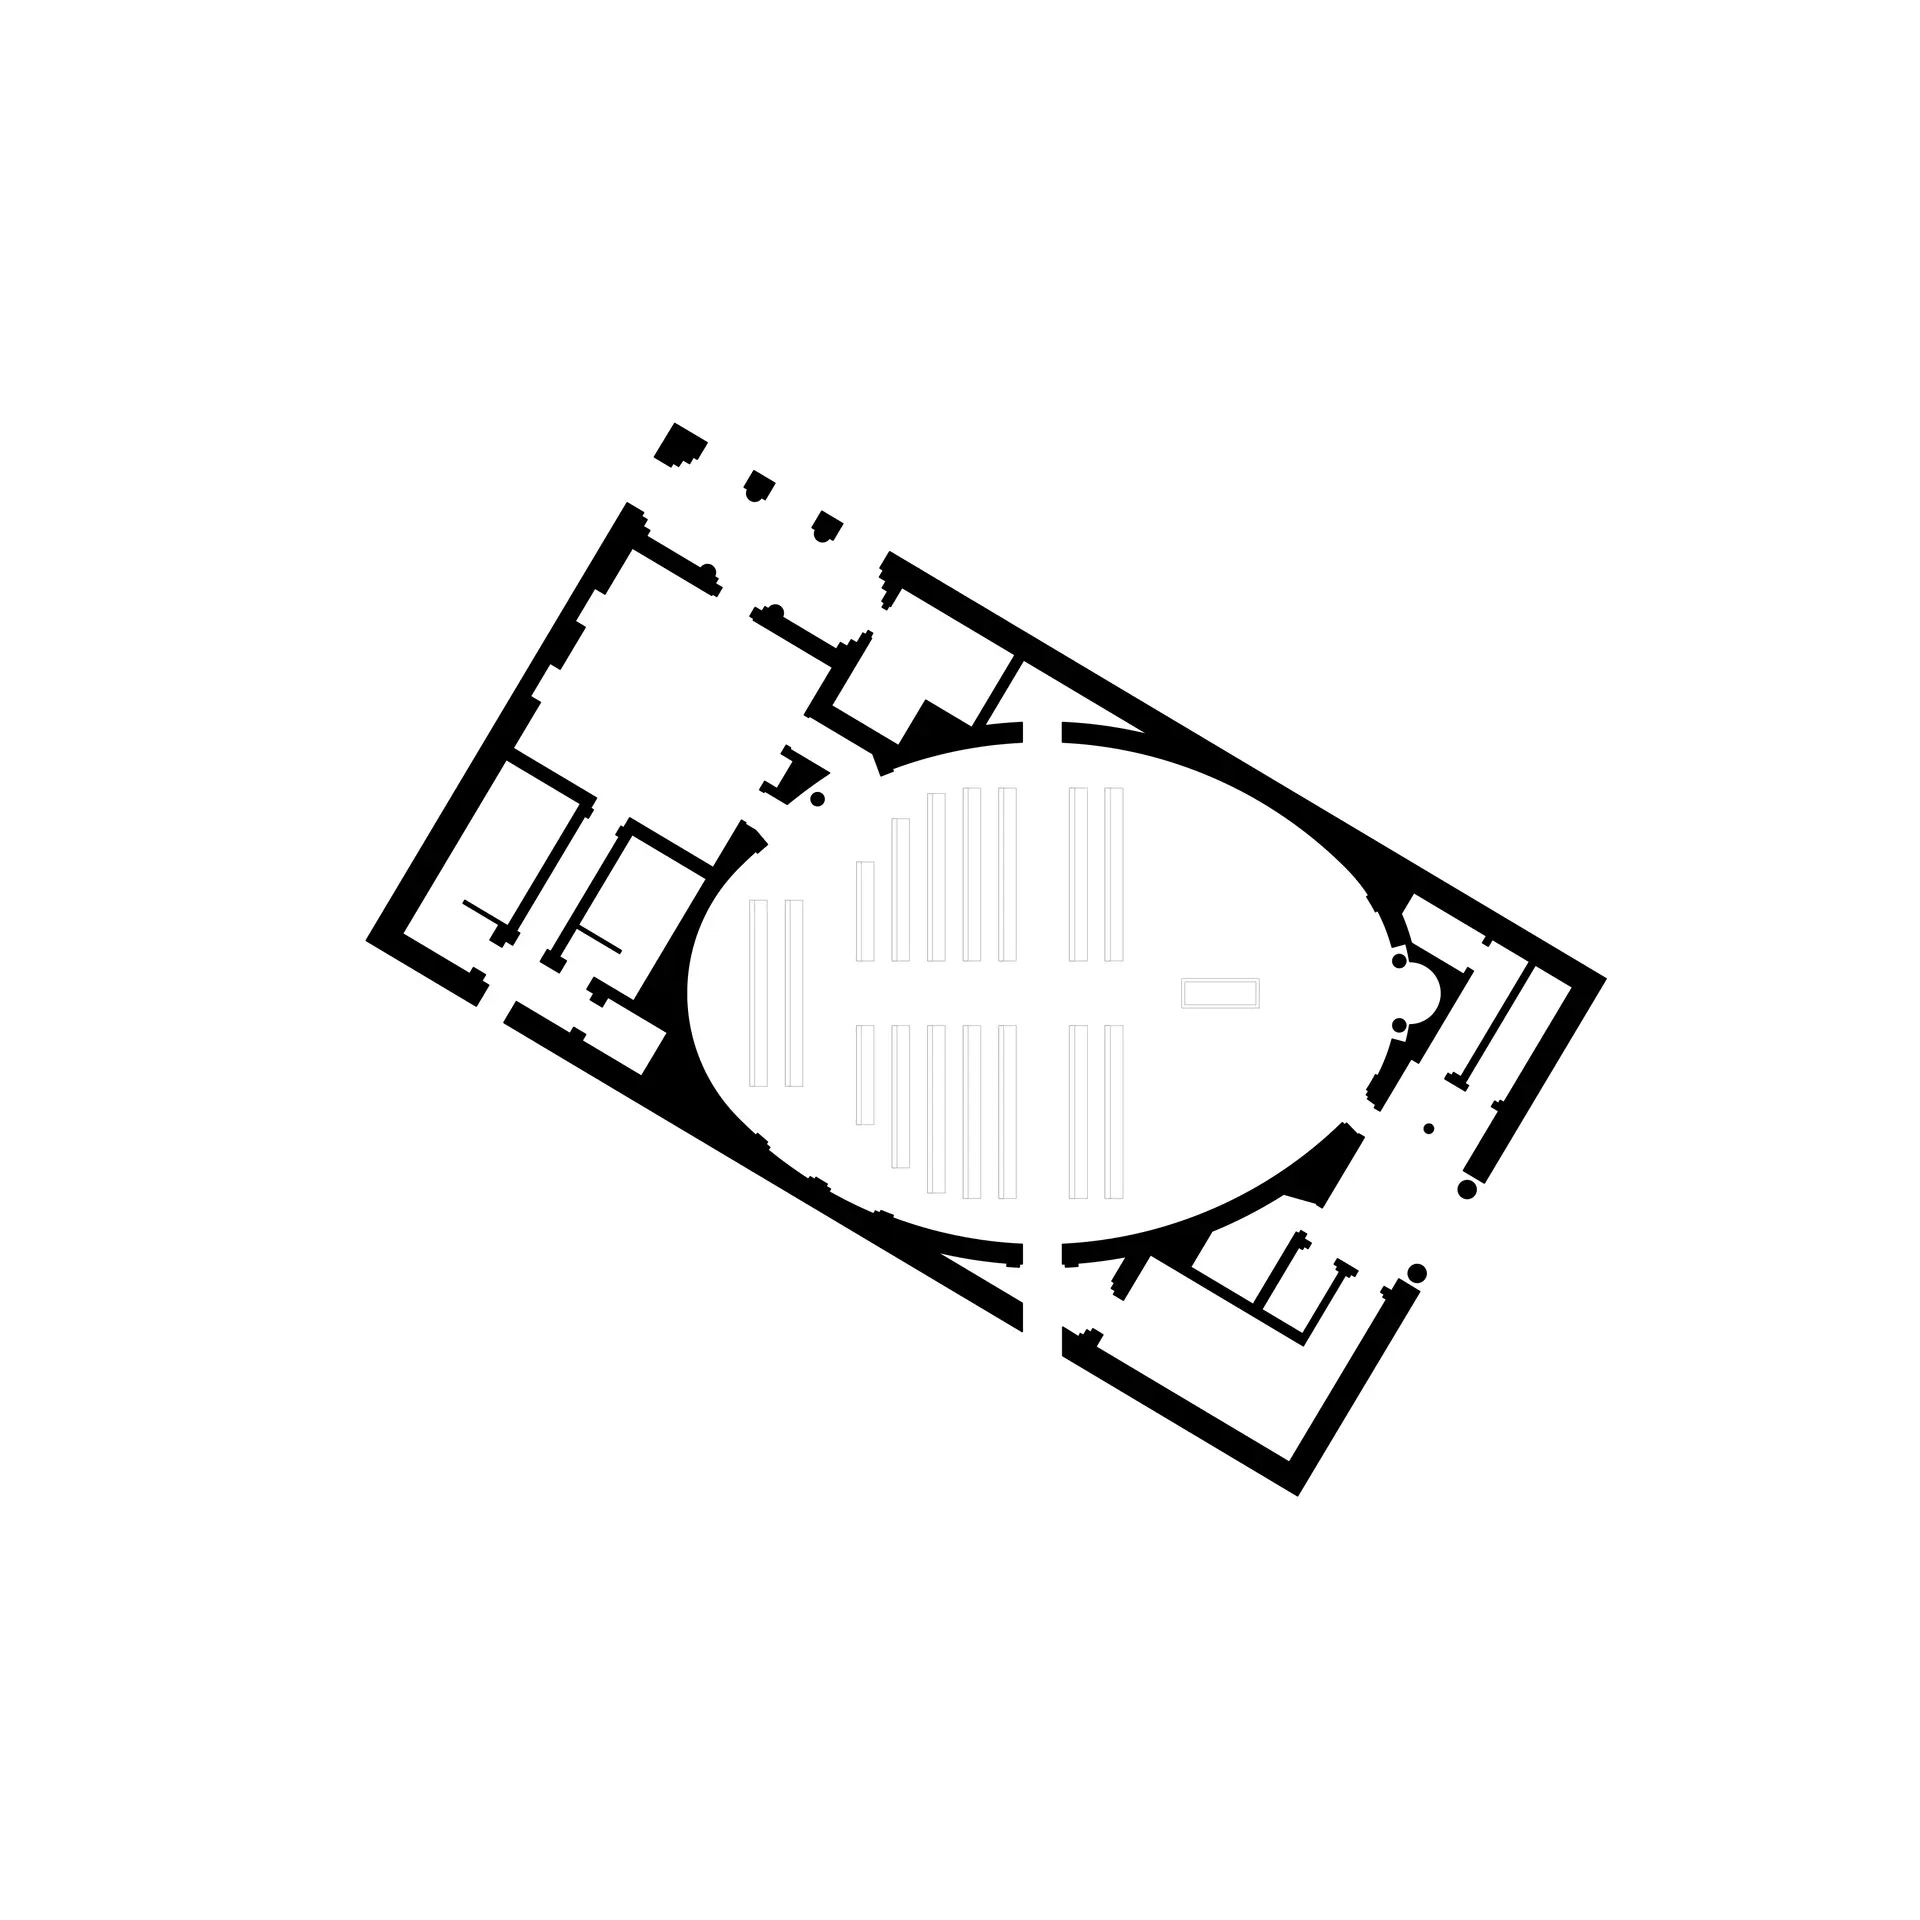 Simplified ground floor plan